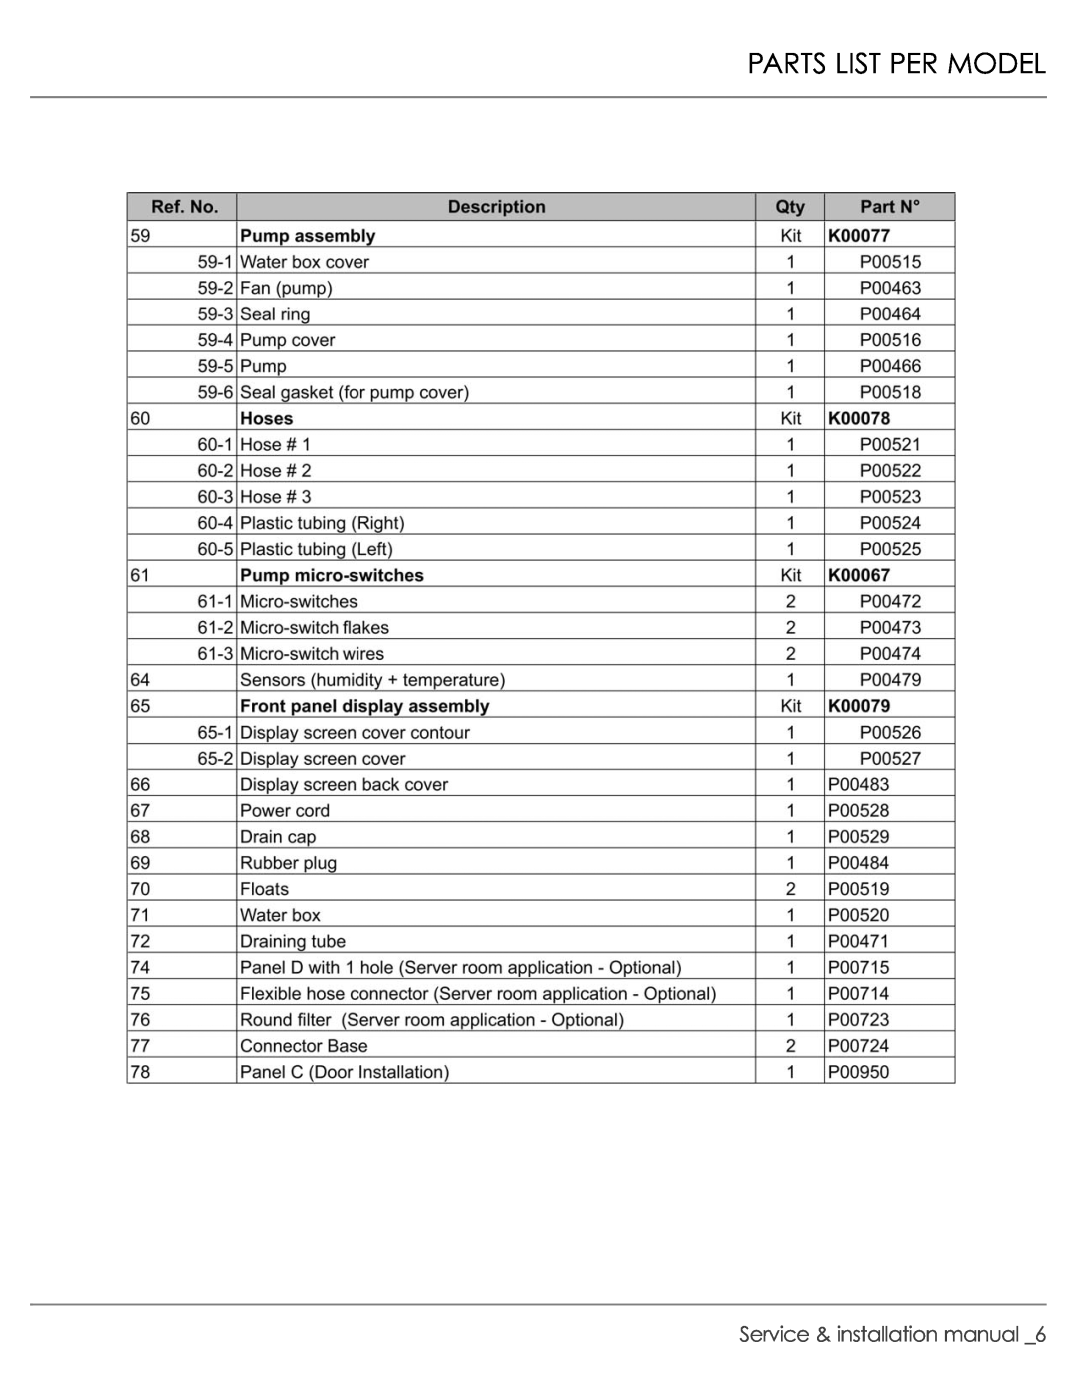 Alpine 12PRA Service & installation manual, Parts List Per Model 